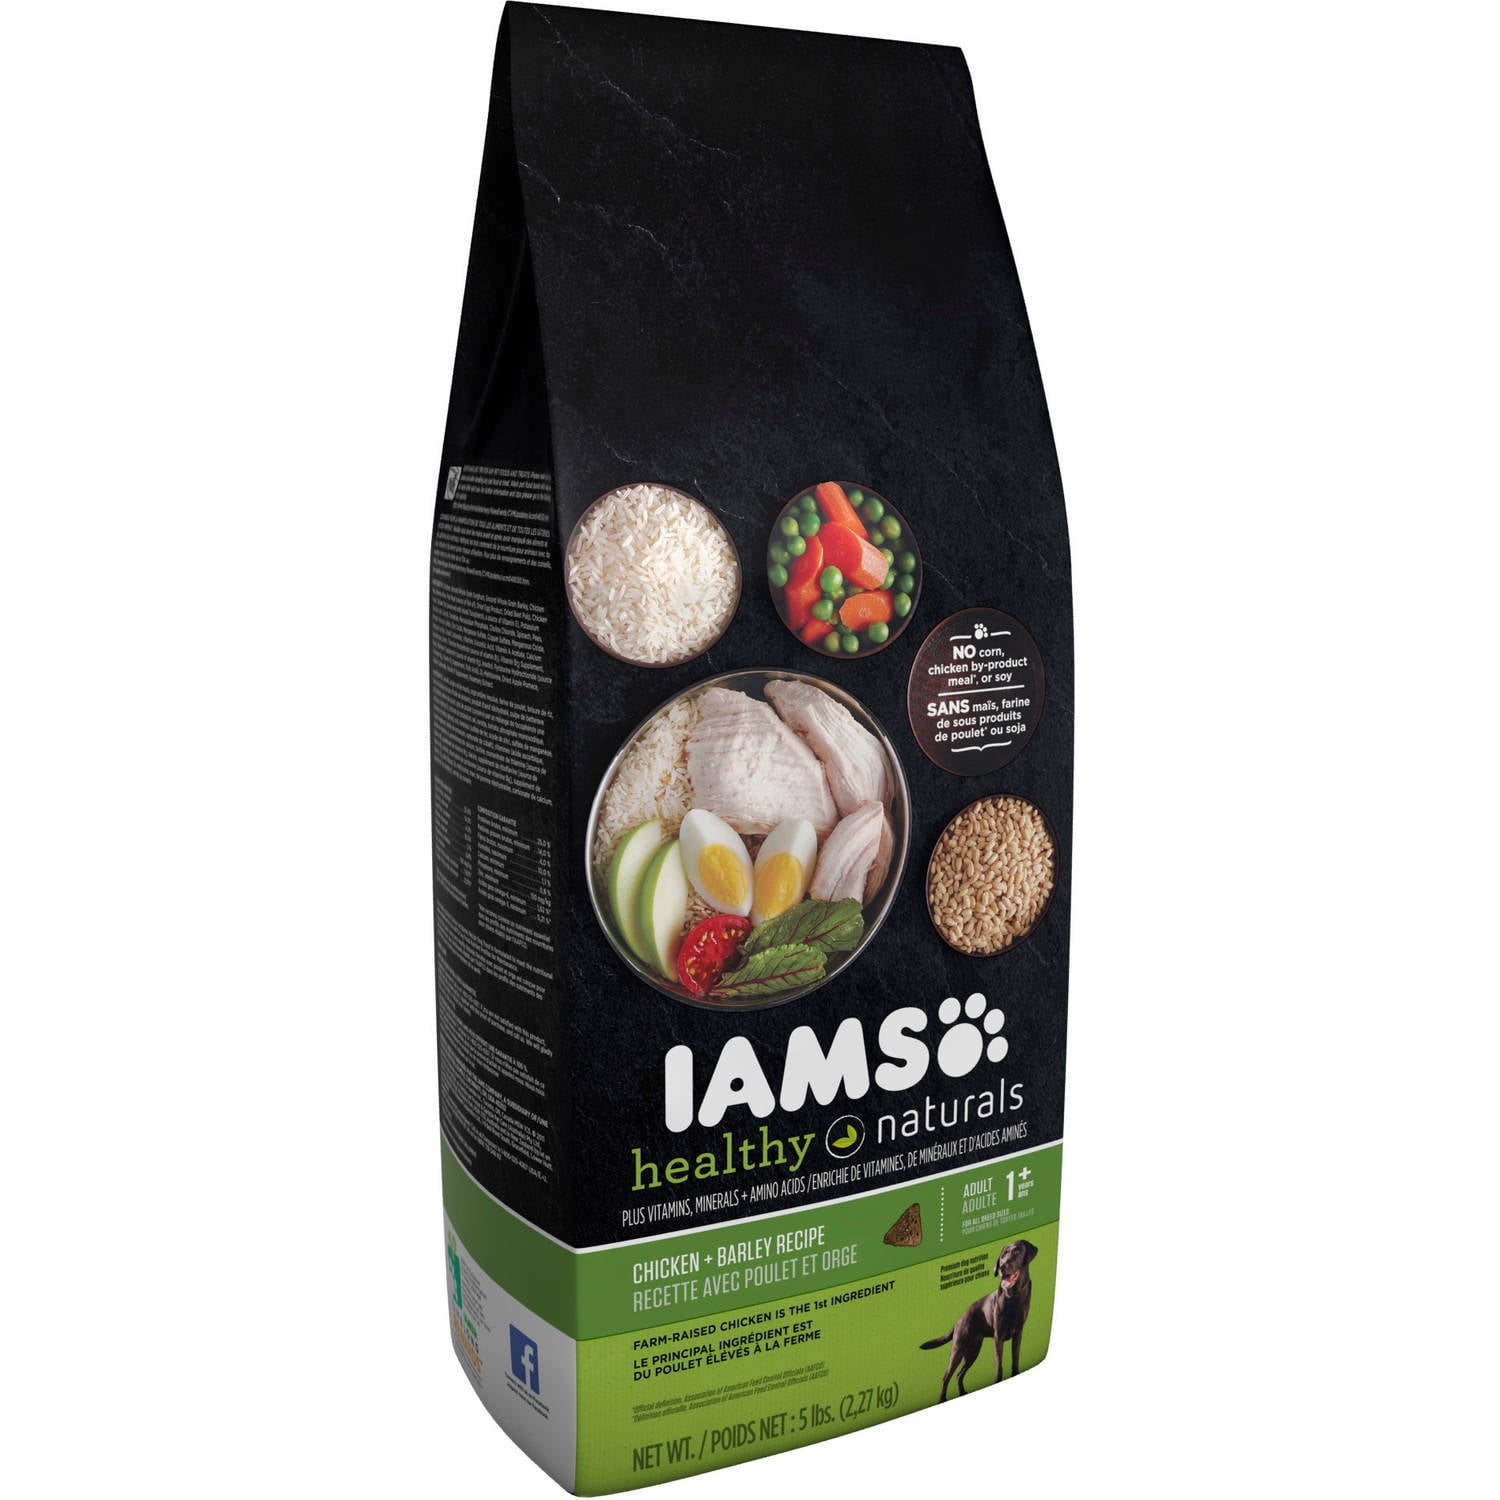 iams healthy naturals chicken & barley recipe adult dry dog food